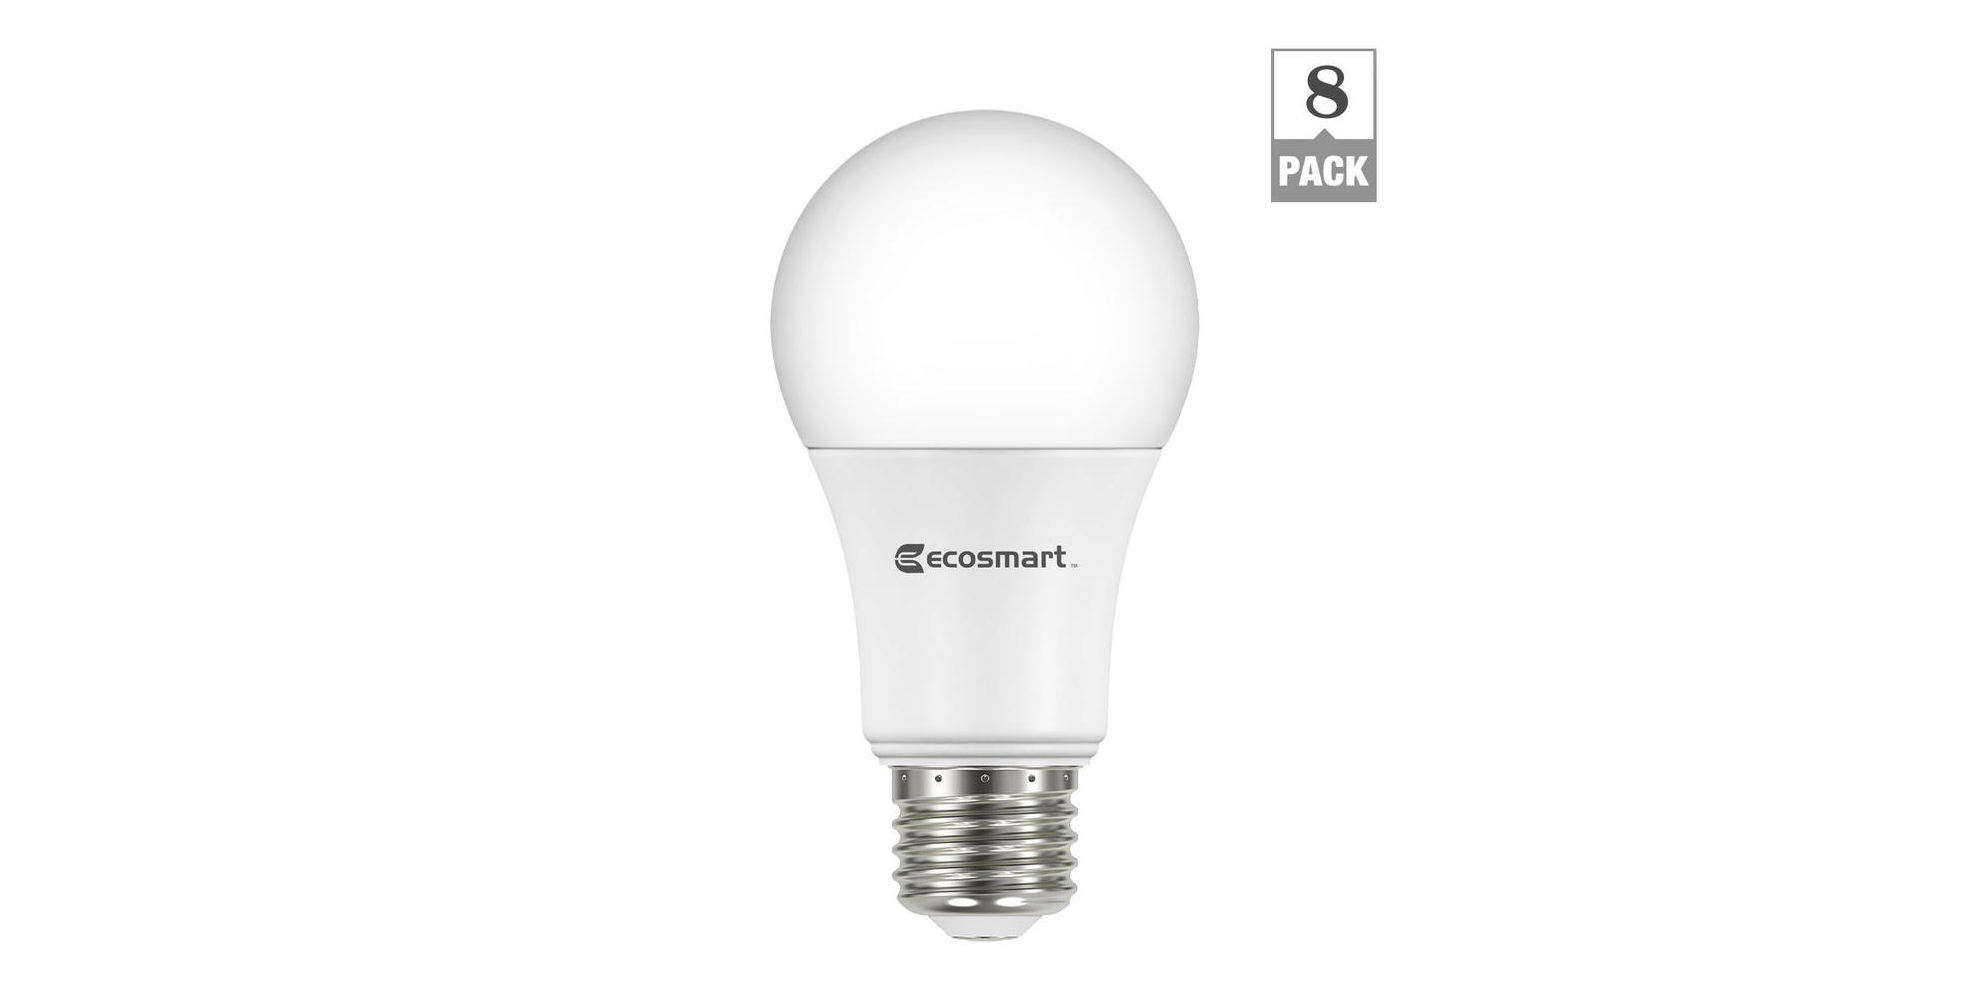 https://electrek.co/wp-content/uploads/sites/3/2017/02/ecosmart-led-light-bulbs.jpg?quality=82&strip=all